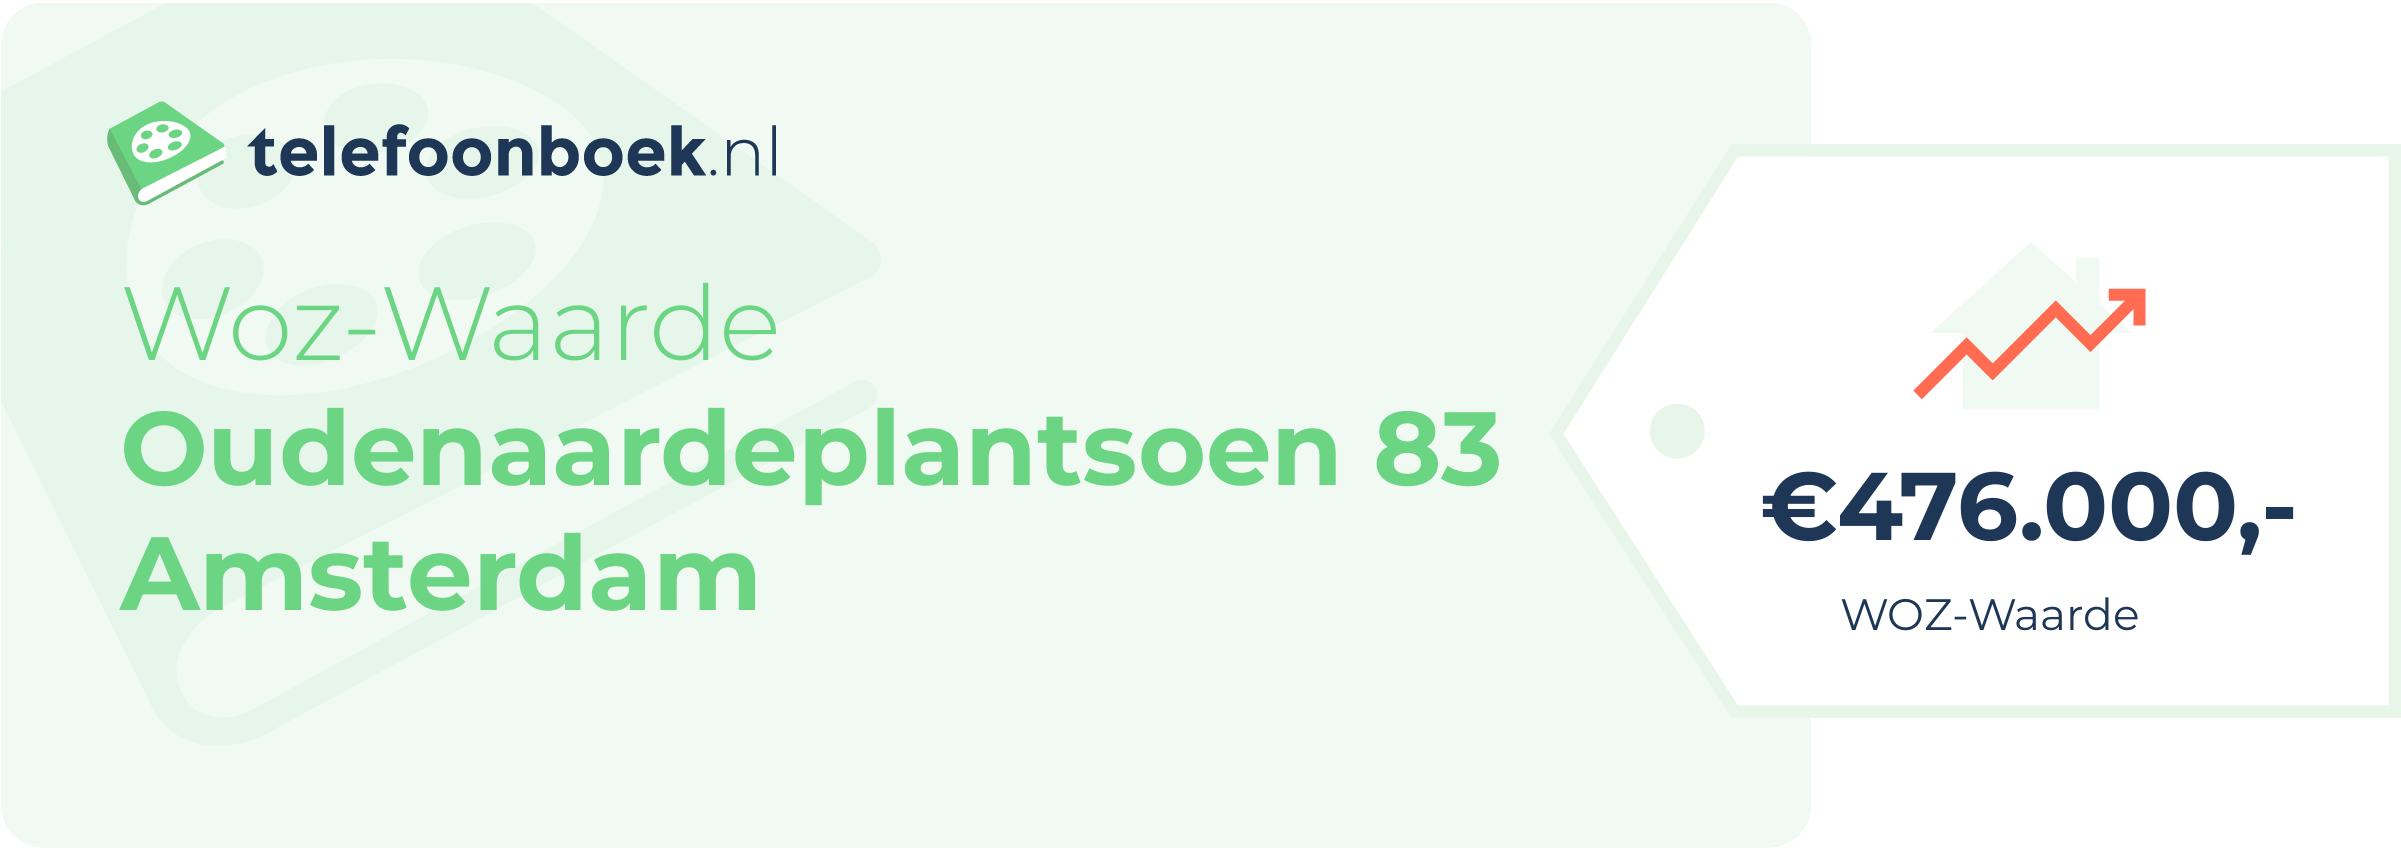 WOZ-waarde Oudenaardeplantsoen 83 Amsterdam